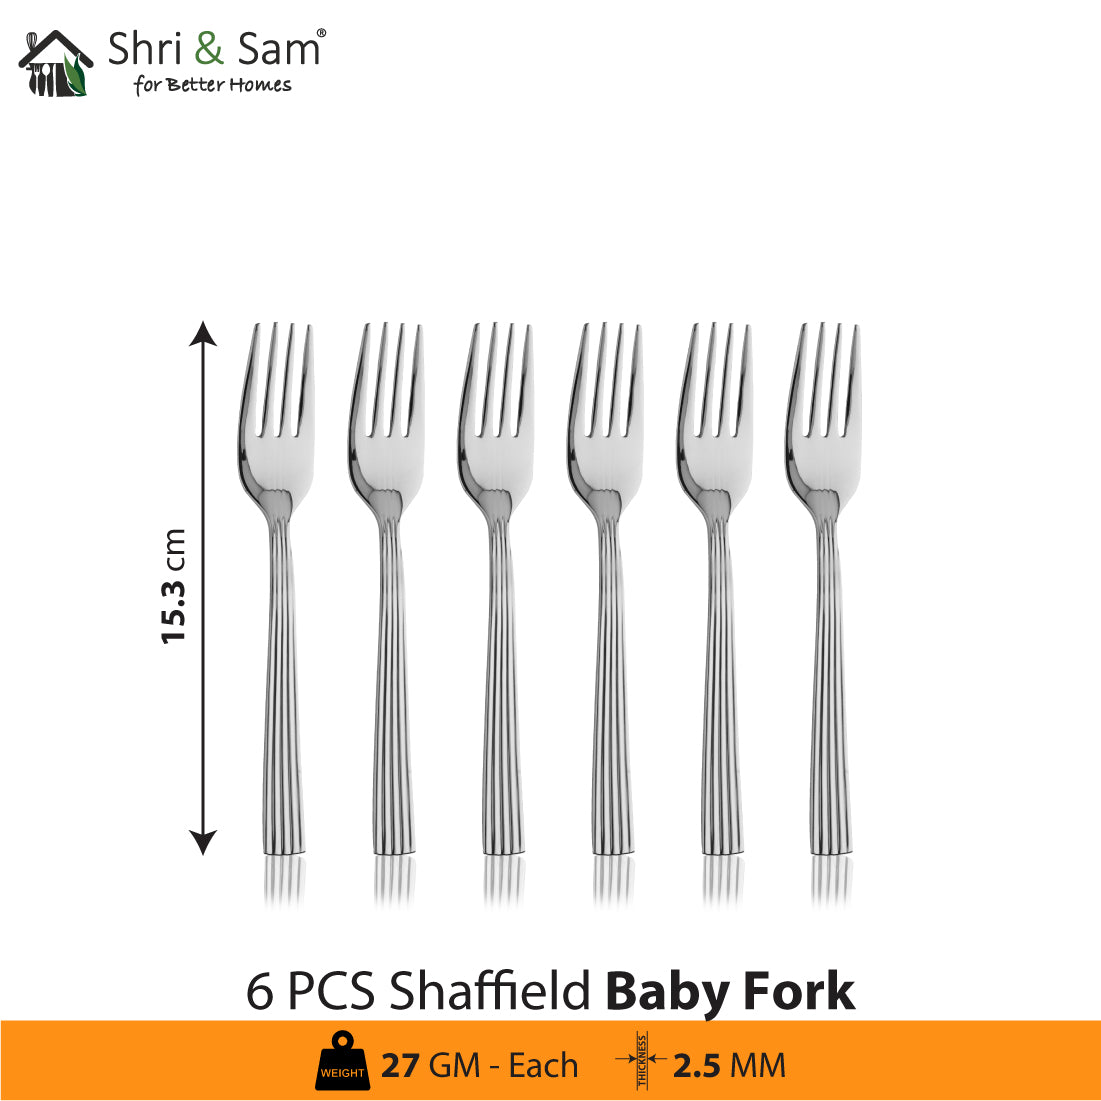 Stainless Steel Cutlery Shaffield